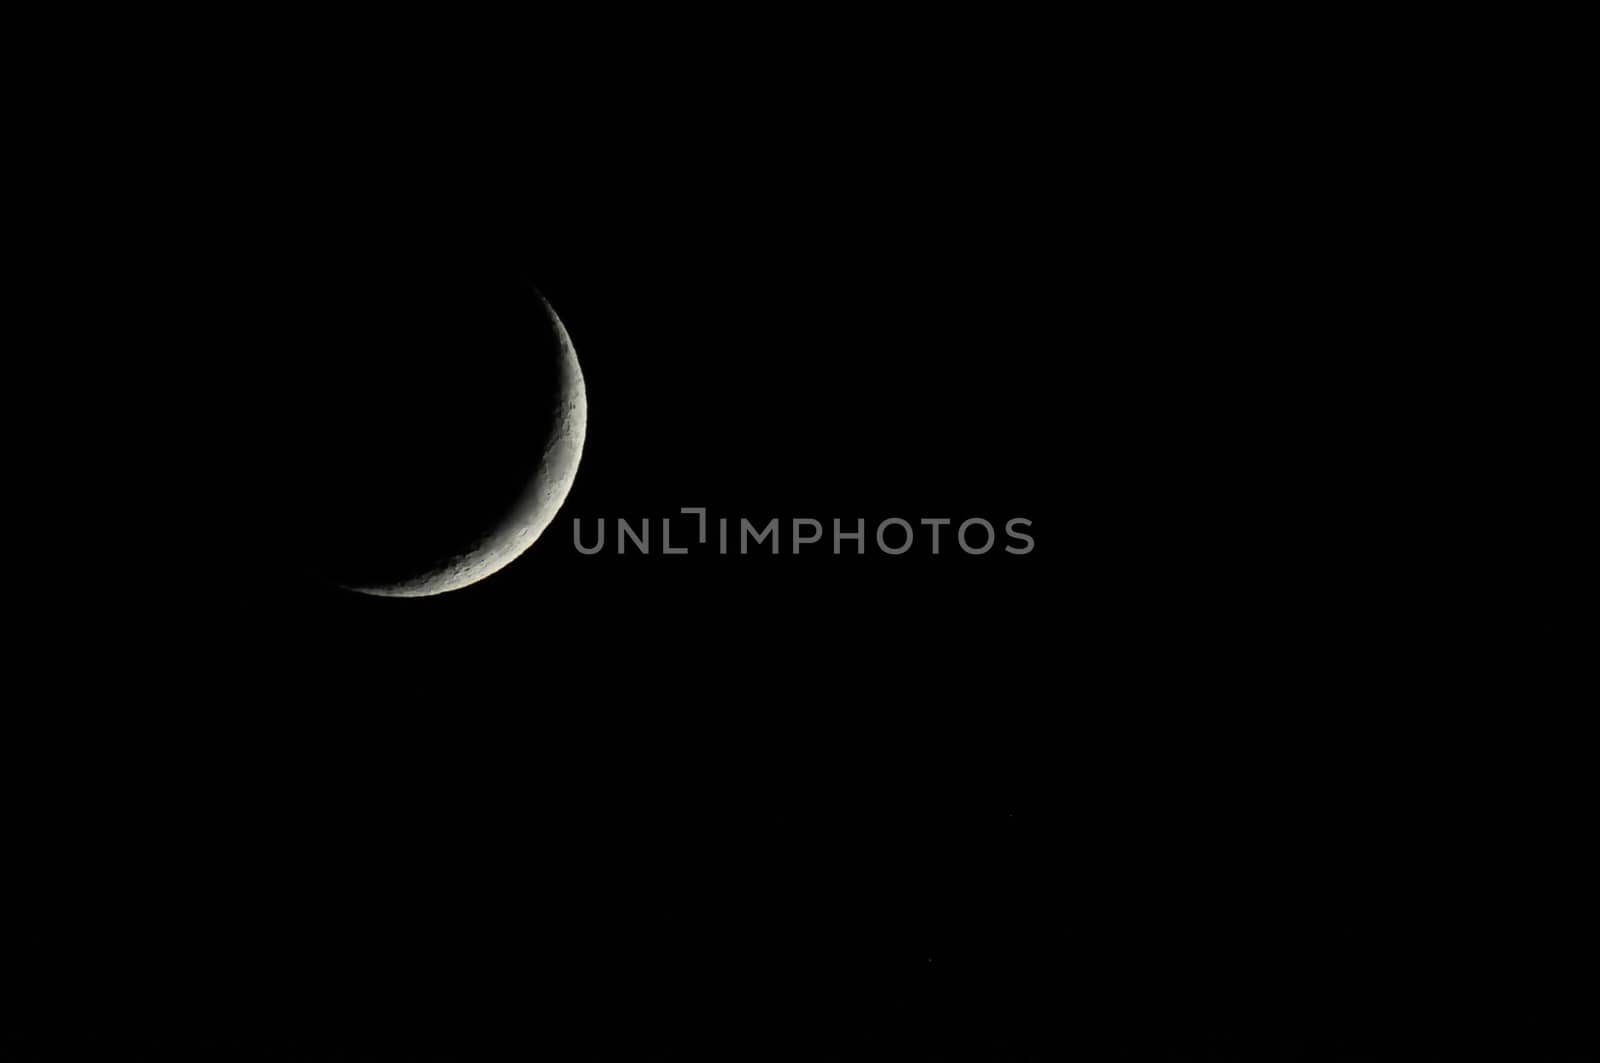 Early Moon by underworld